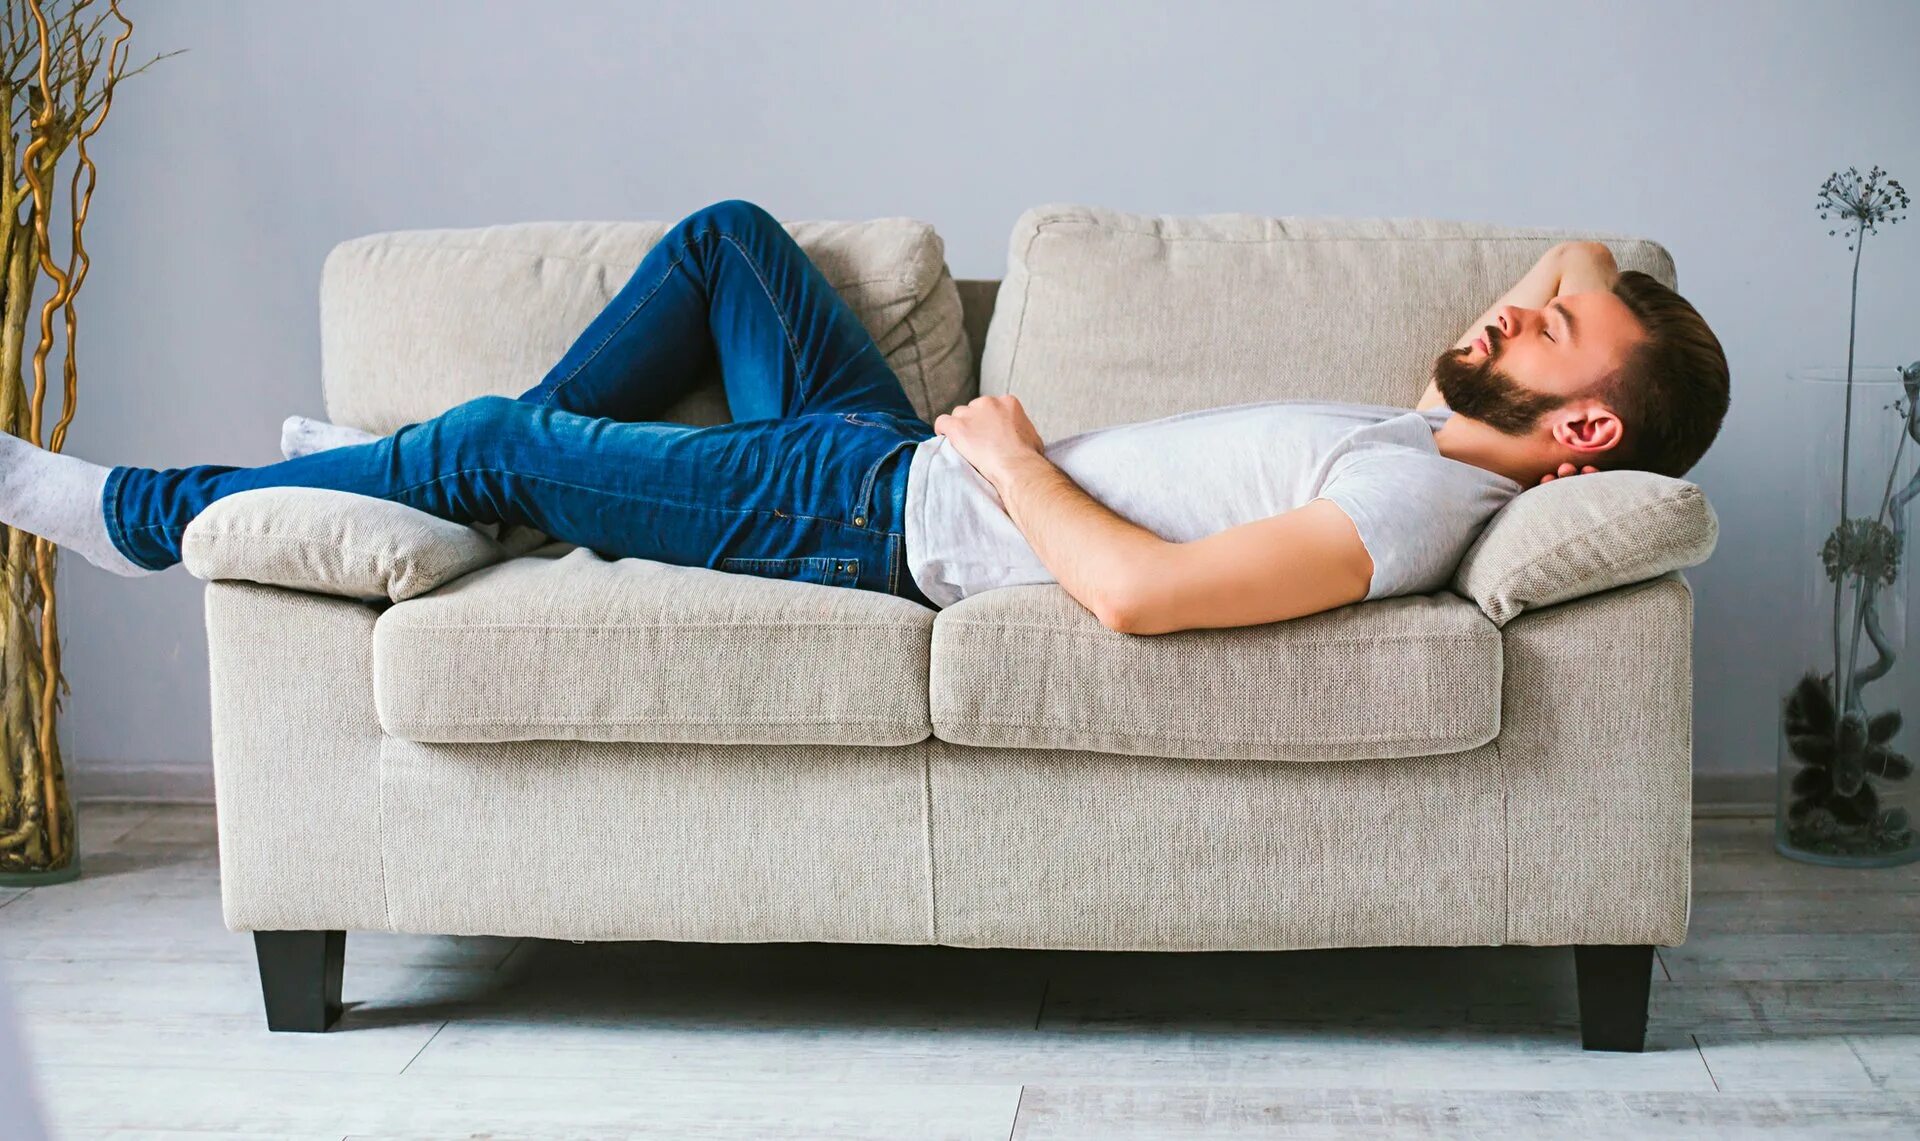 Картинки лежа на диване. Человек лежит на диване. Мужчина на диване. Парень лежит на диване. Человек отдыхает на диване.